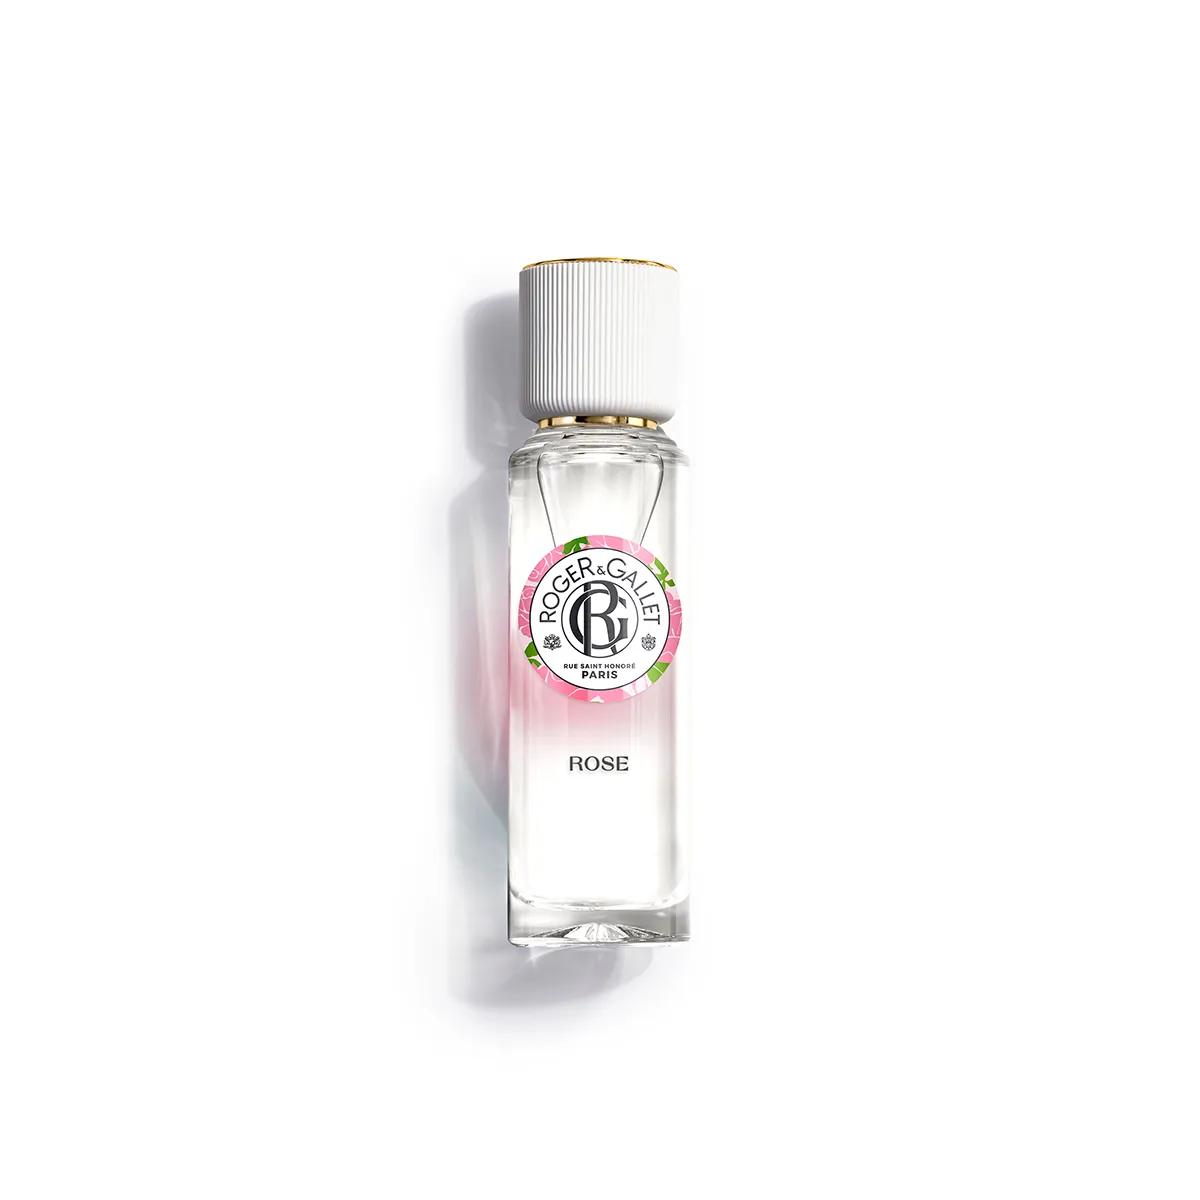 R&G Rose Eau Parfumée 30 ml Acqua profumata